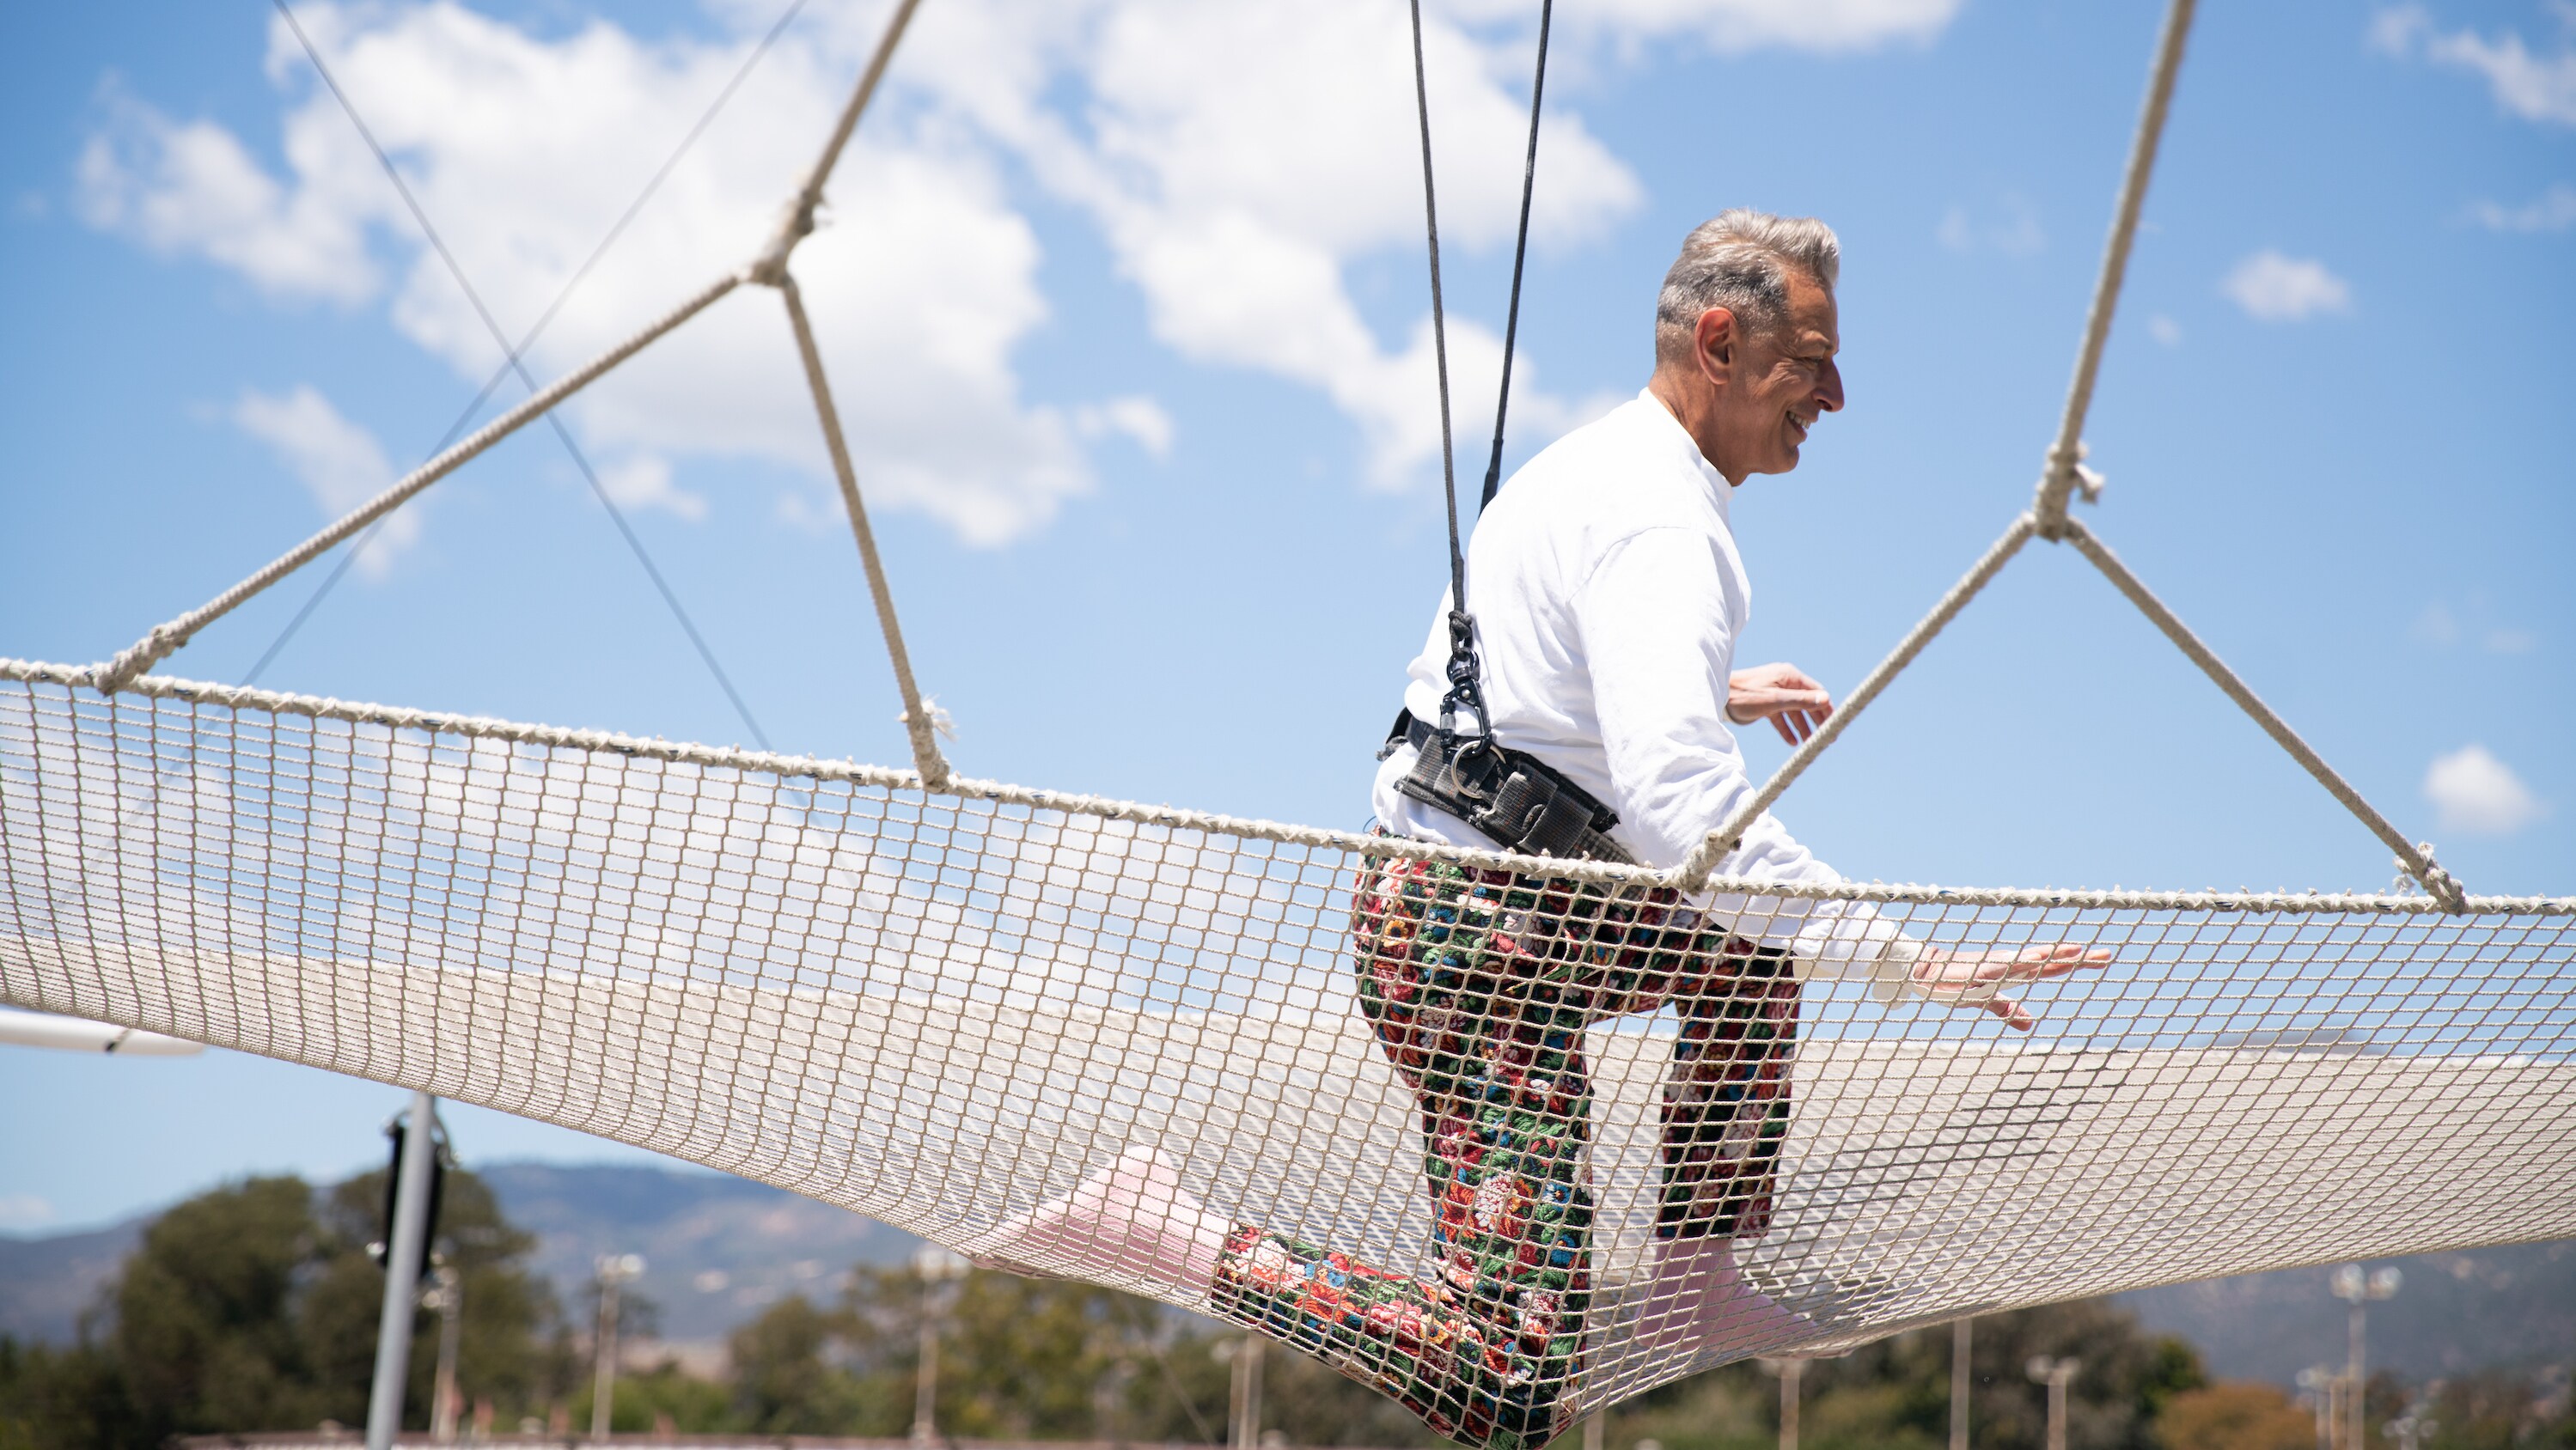 Santa Barbara, CA - Jeff Goldblum on net after swinging on a trapeze. (Credit: National Geographic)